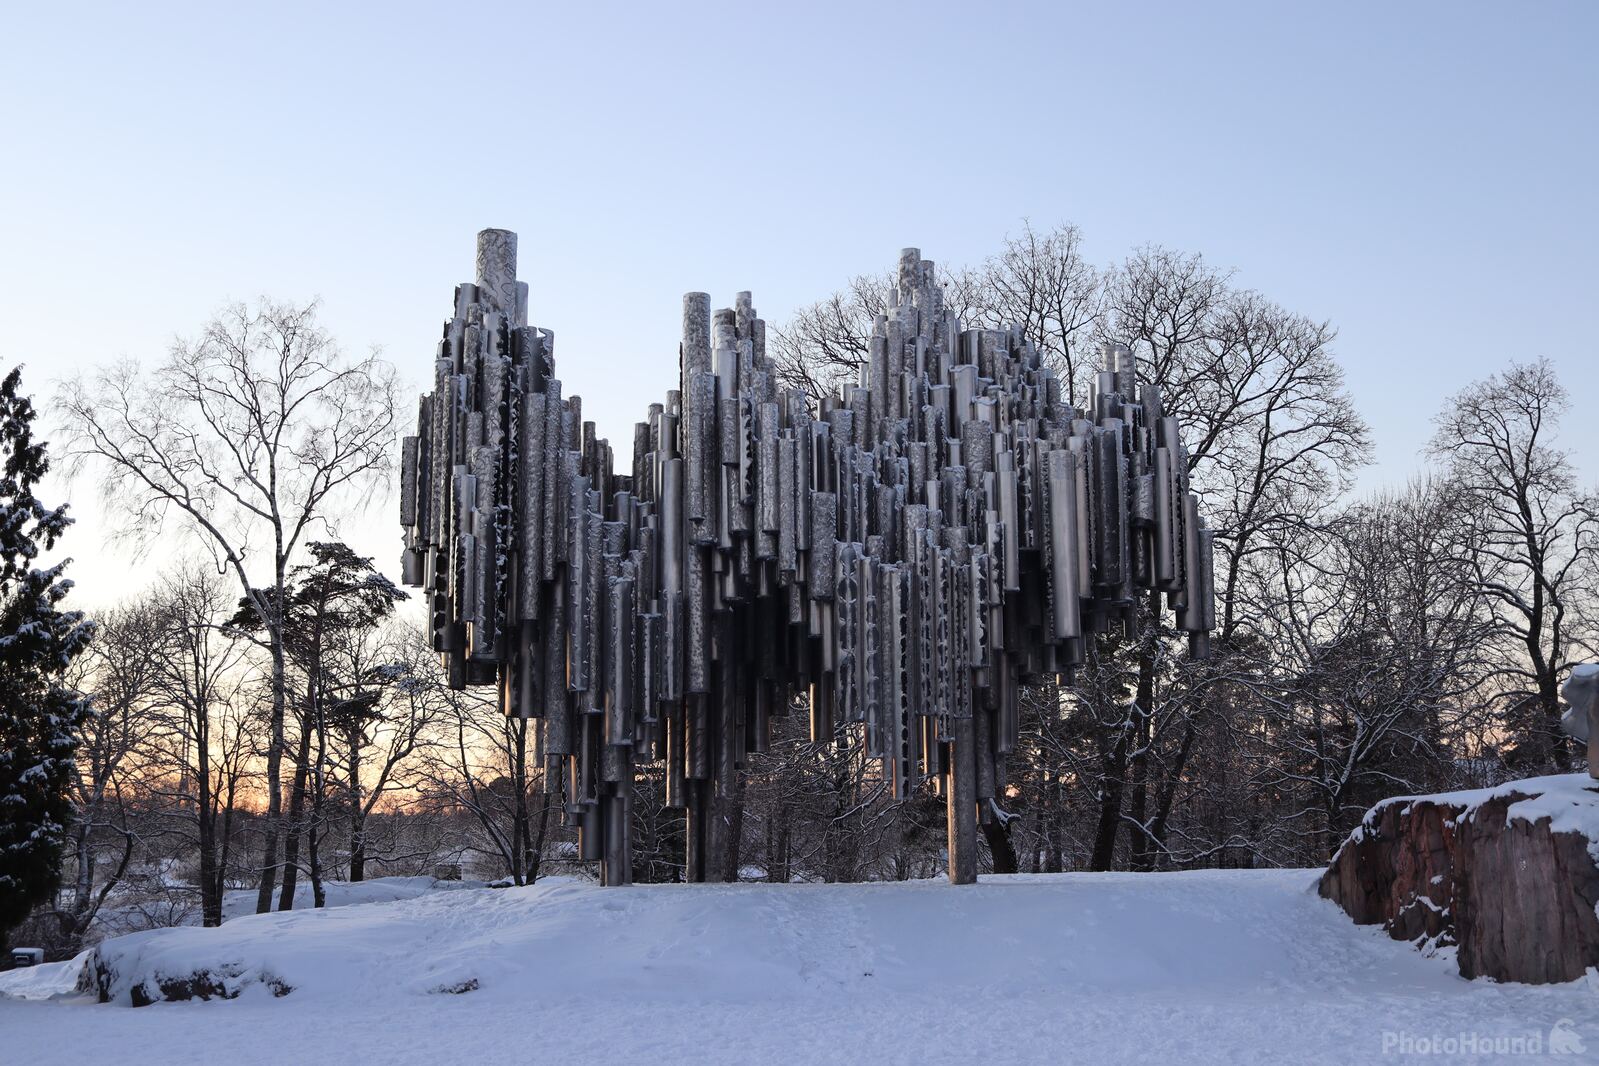 Image of Sibelius Monument by Team PhotoHound